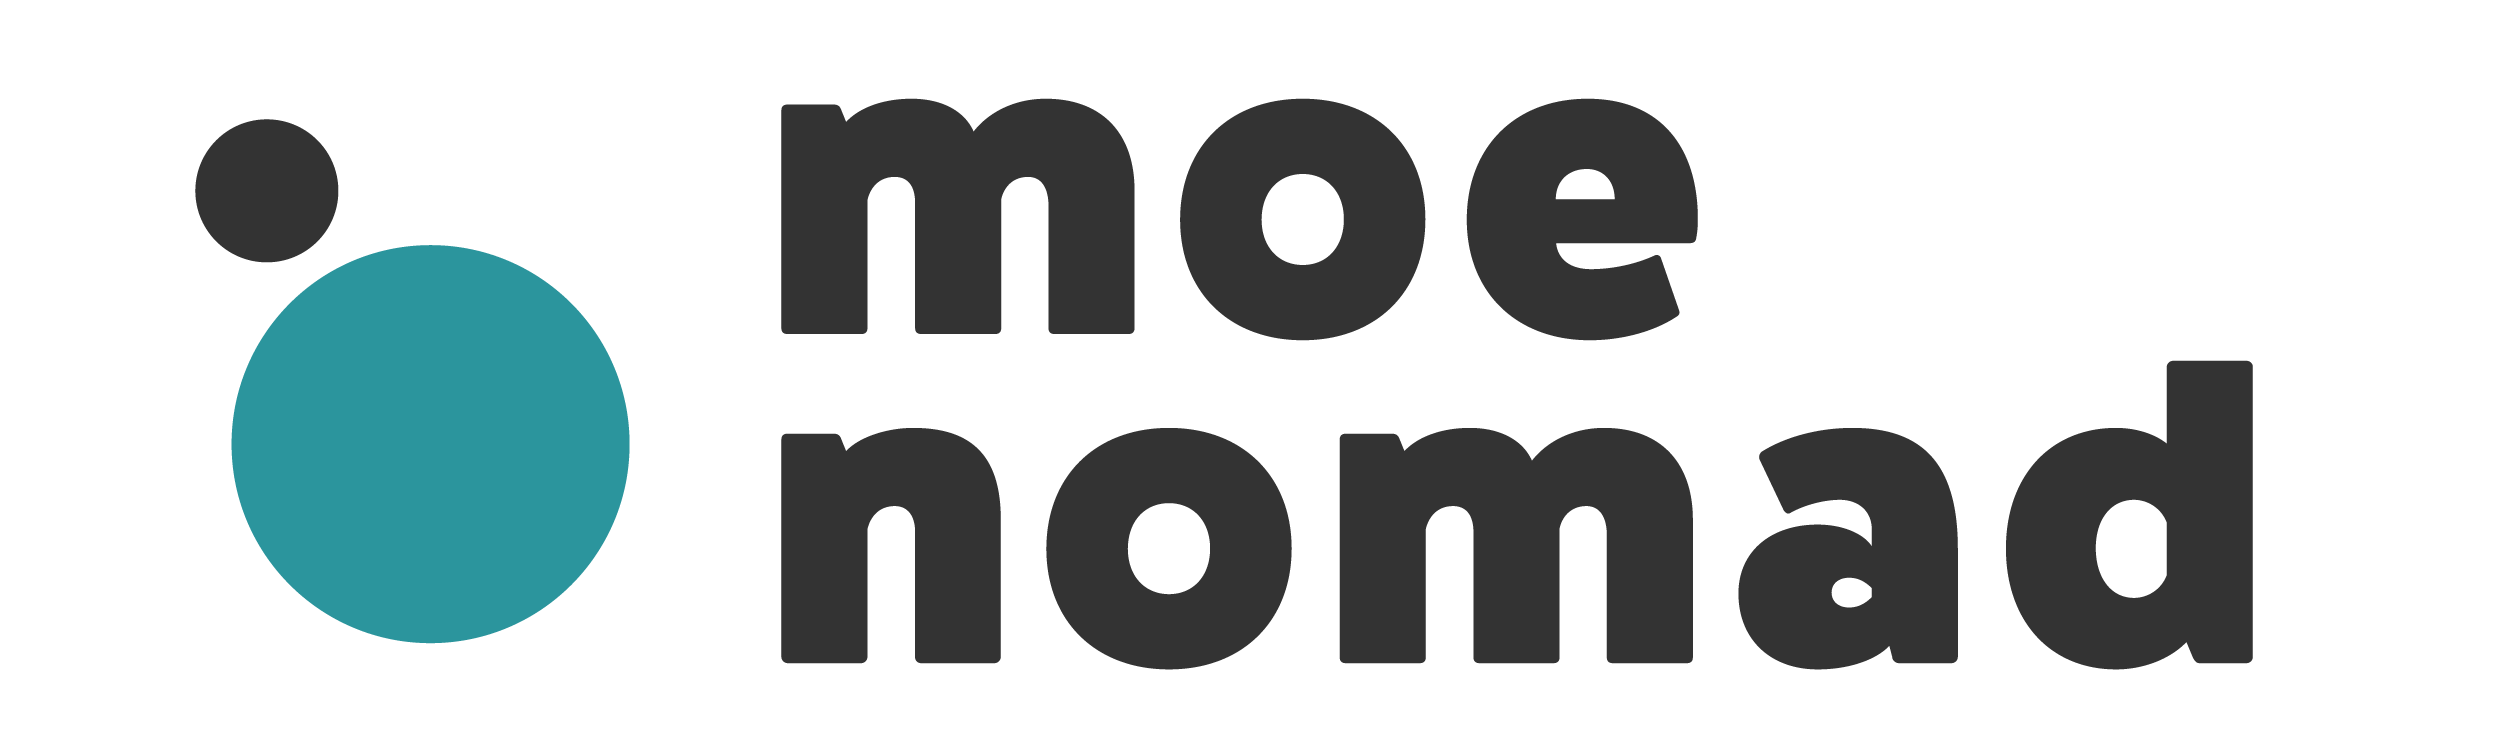 moenomad / 東南アジアでノマド生活